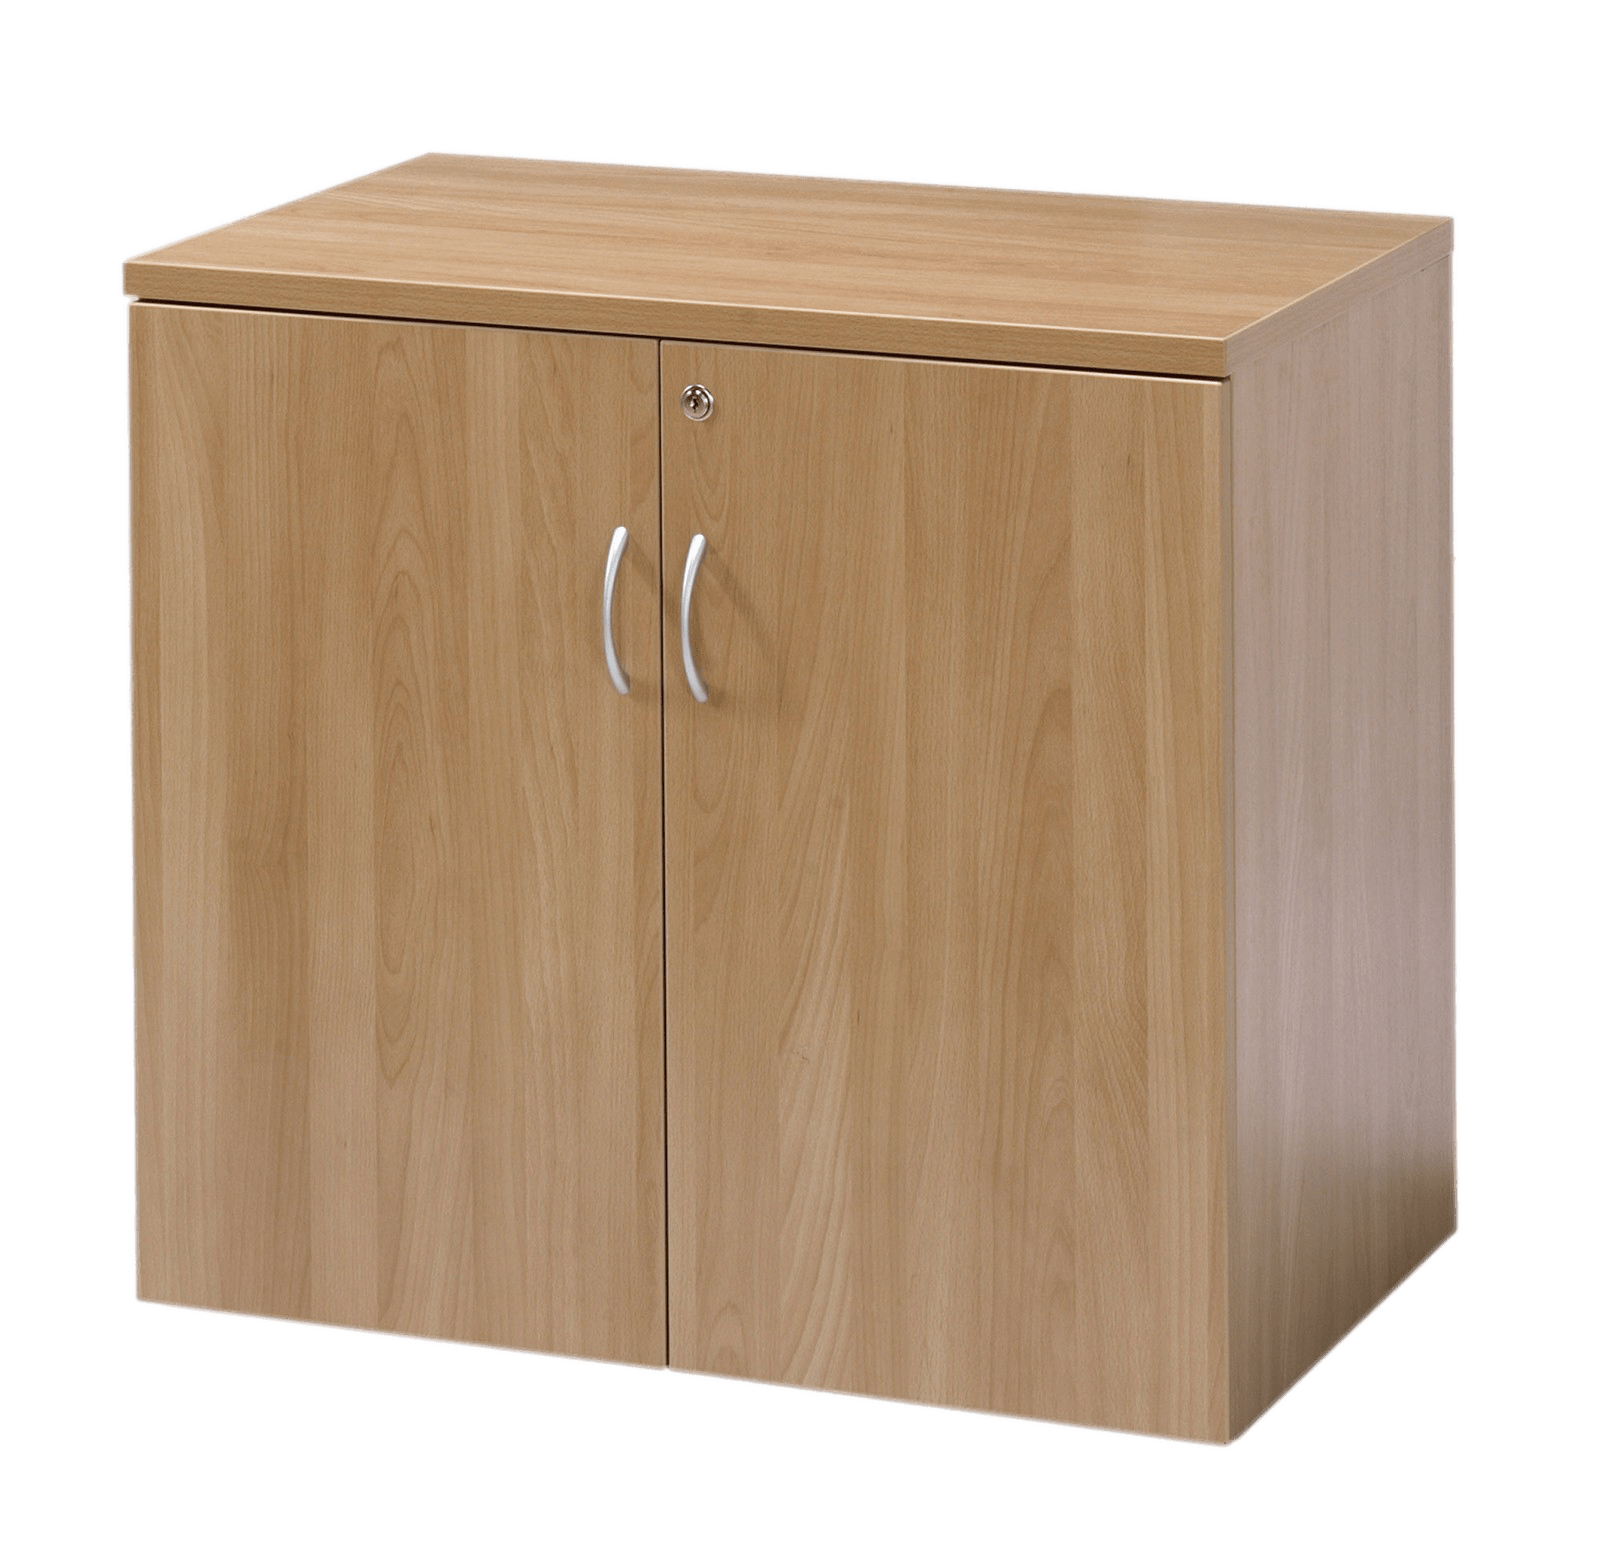 Wood Cupboard PNG Transparent Image